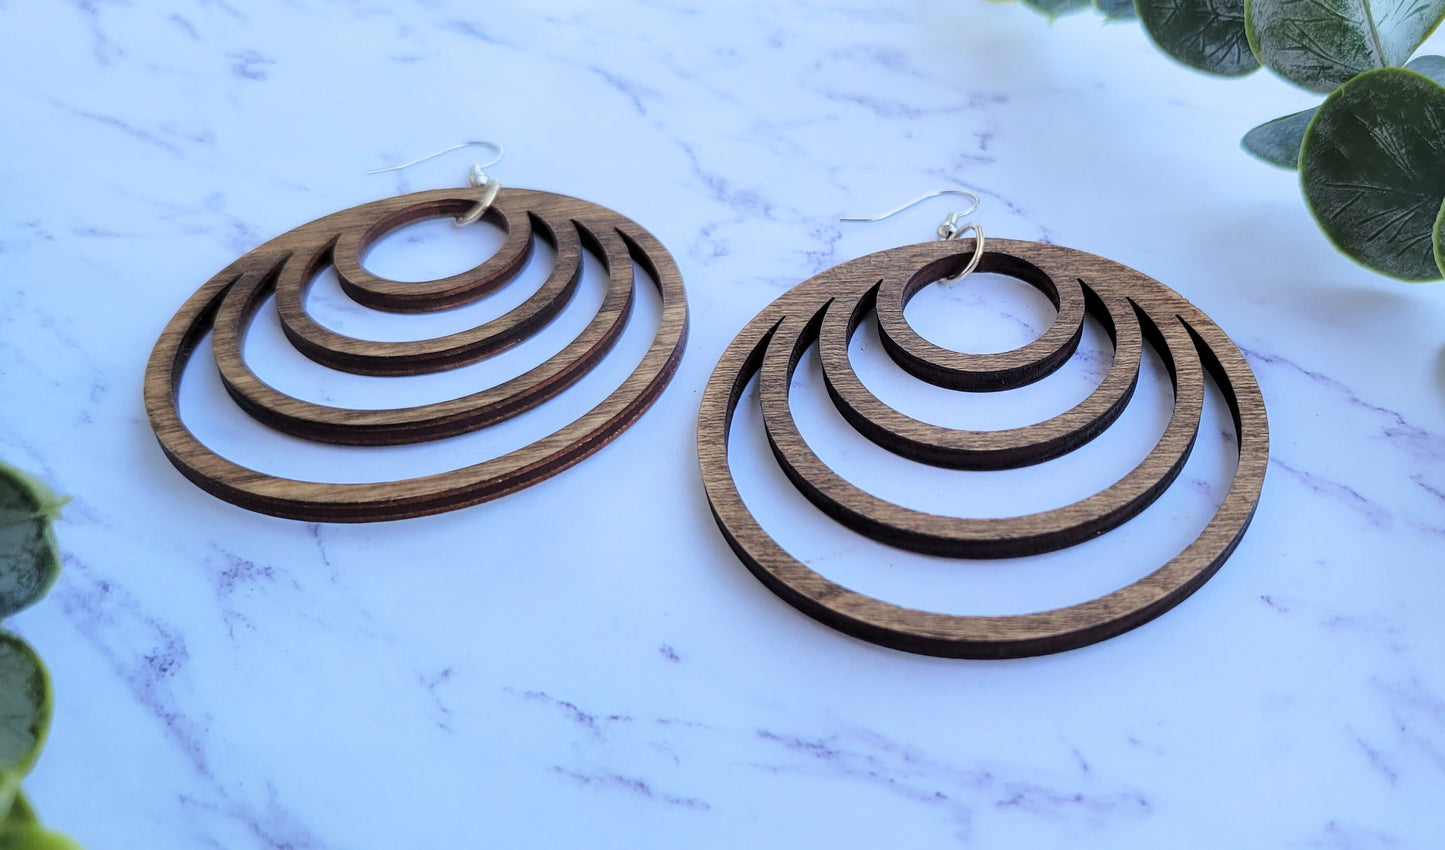 Over Sized Concentric Circles Wooden Hoop Earrings - Minimalist Hoops - Dangle Hoop Earrings - Wooden Earrings - Big O Earrings - Wood Hoops